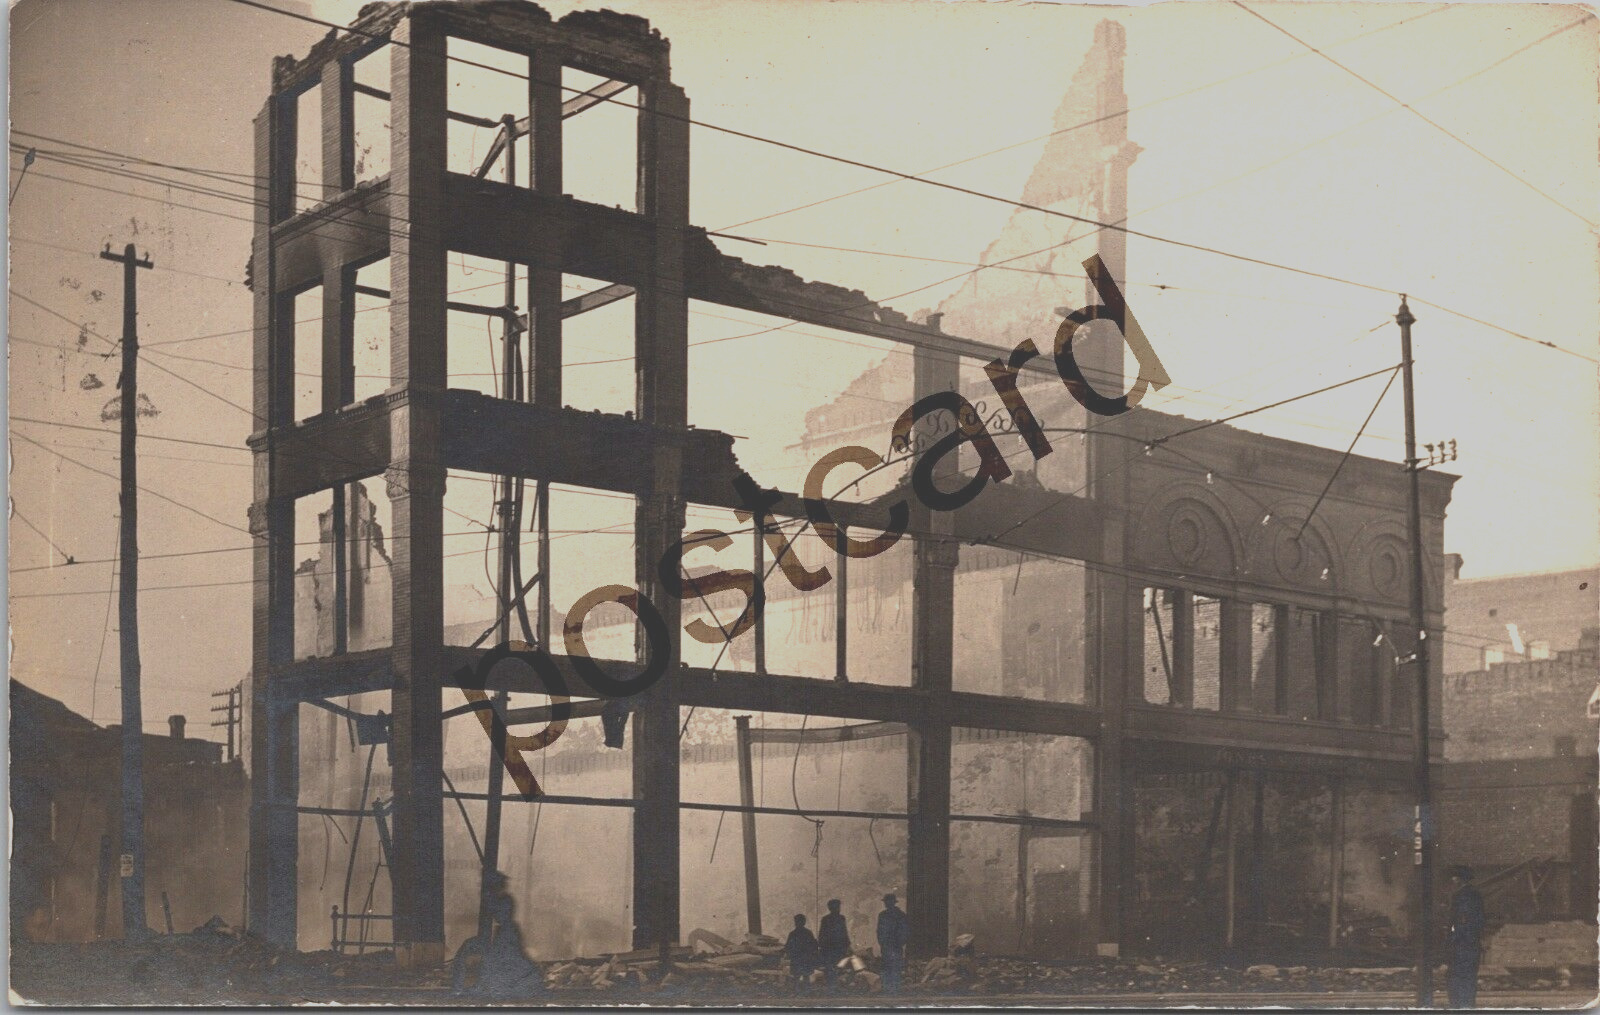 1909 Fire Destroyed Building, VAN WERT OH,  RPPC postcard jj271